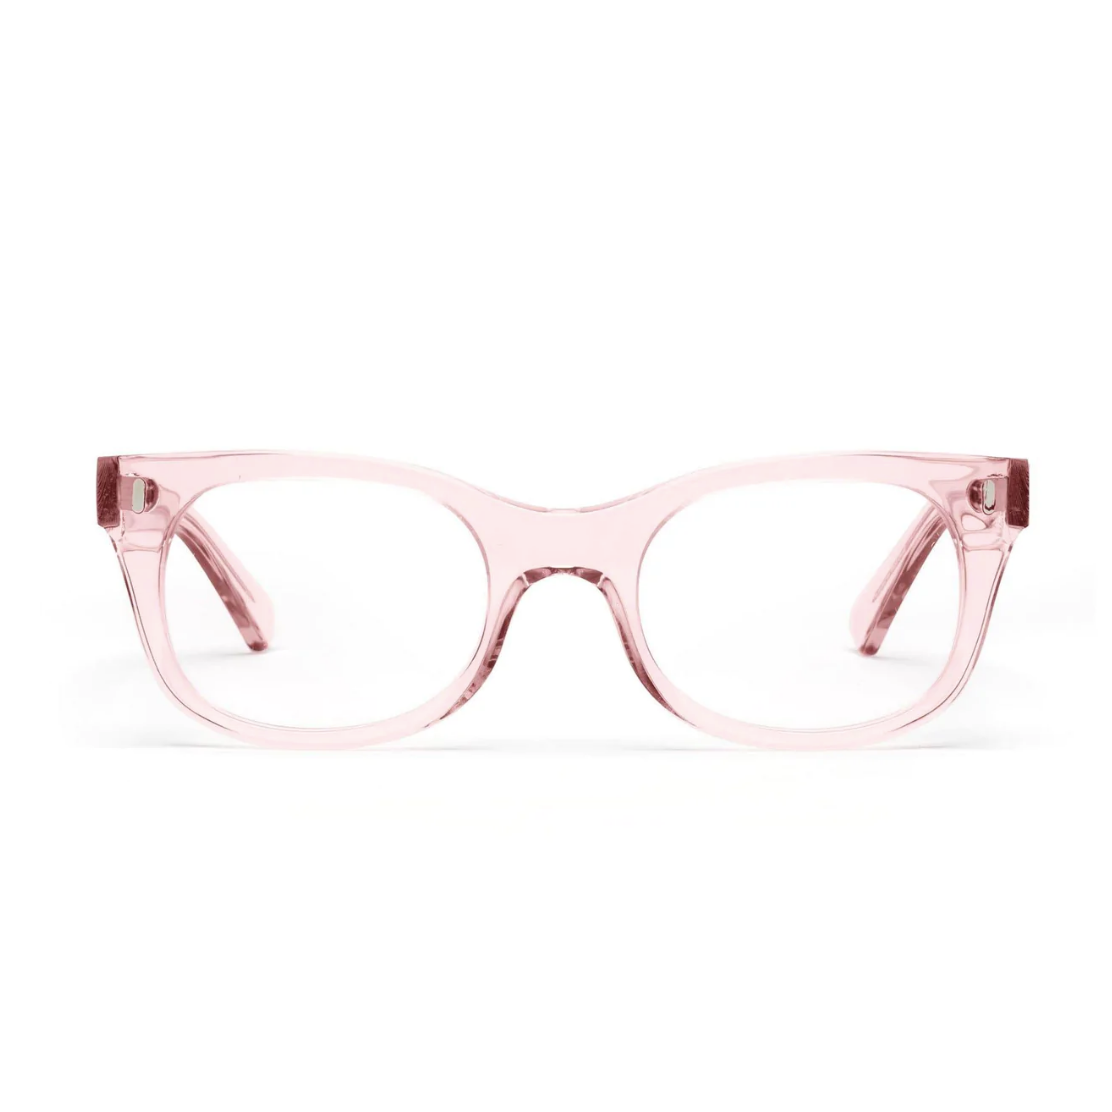 Gotstyle Fashion - Caddis Eyewear Bixby Thick Frame Reading Glasses - Polished Clear Pink